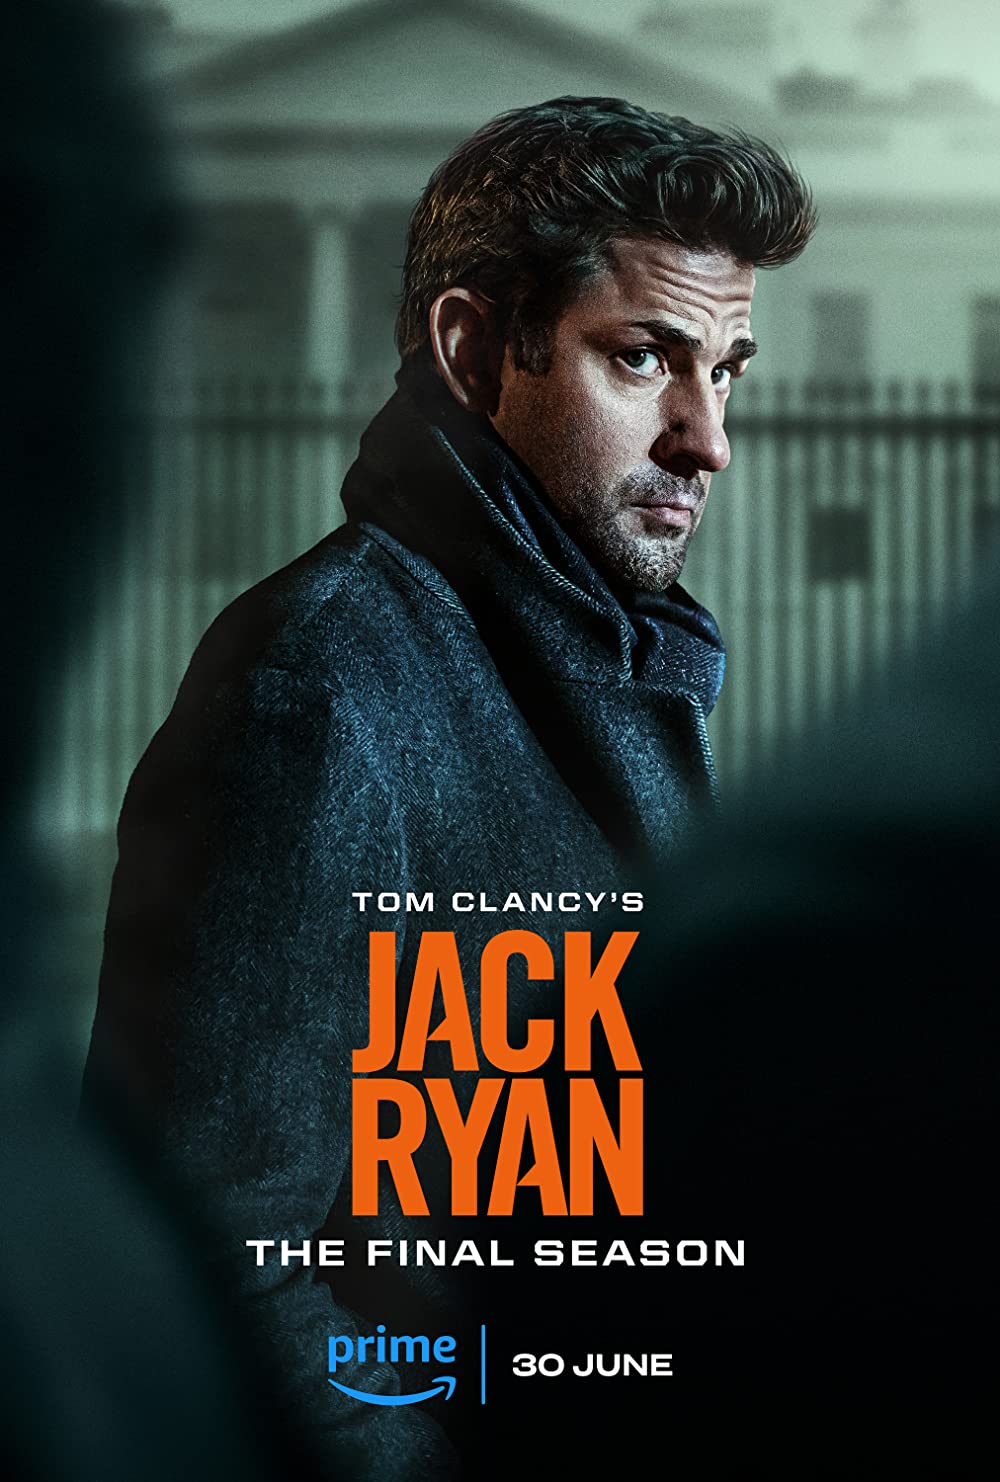 Tom Clancys Jack Ryan S04E02 Convergence 1080p AMZN WEB-DL DDP5 1 H 264-NTb mkv